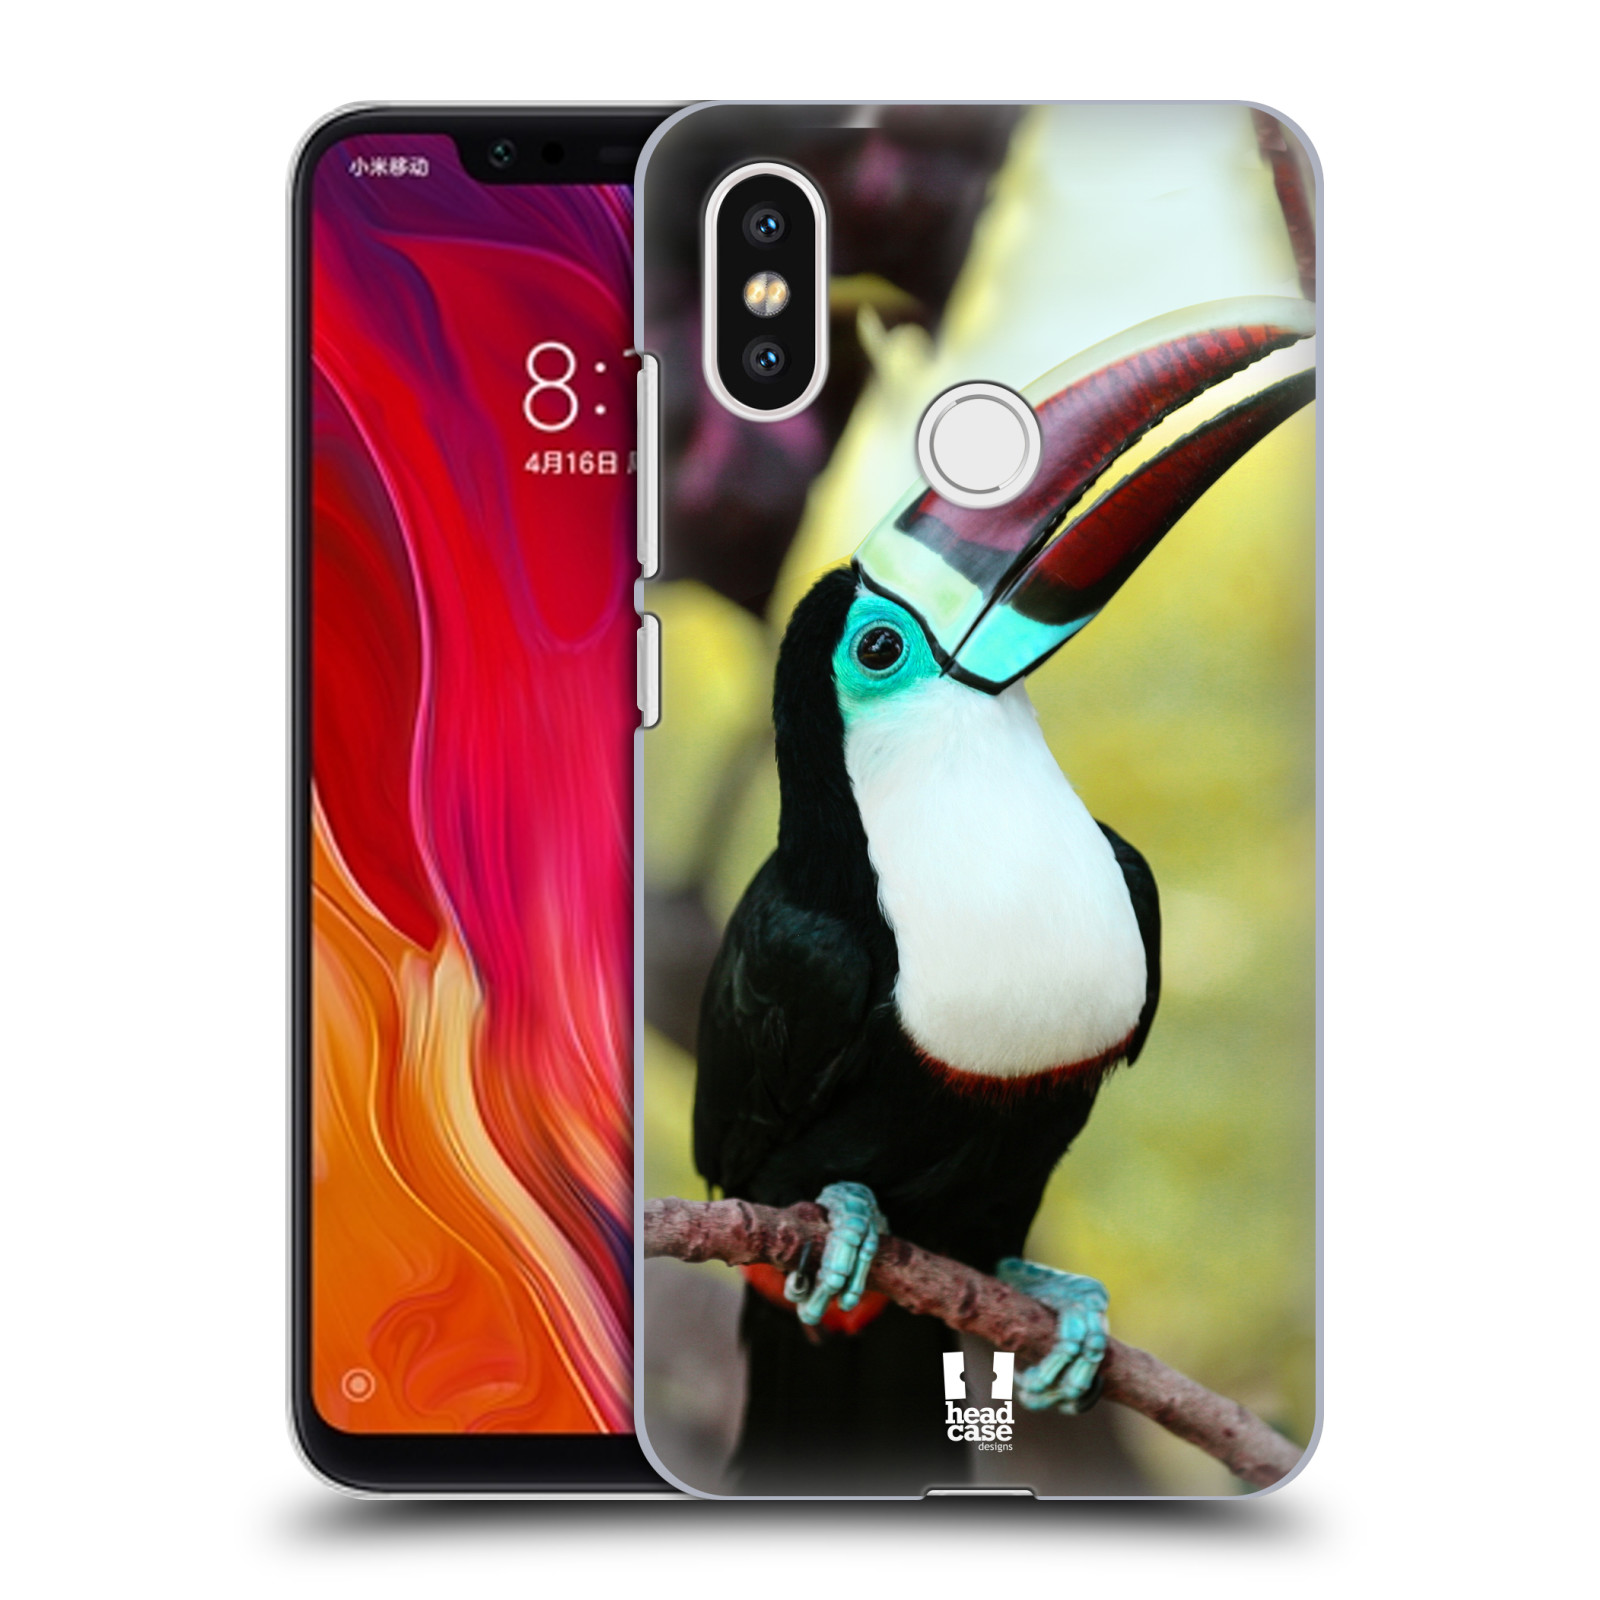 HEAD CASE plastový obal na mobil Xiaomi Mi 8 vzor slavná zvířata foto tukan